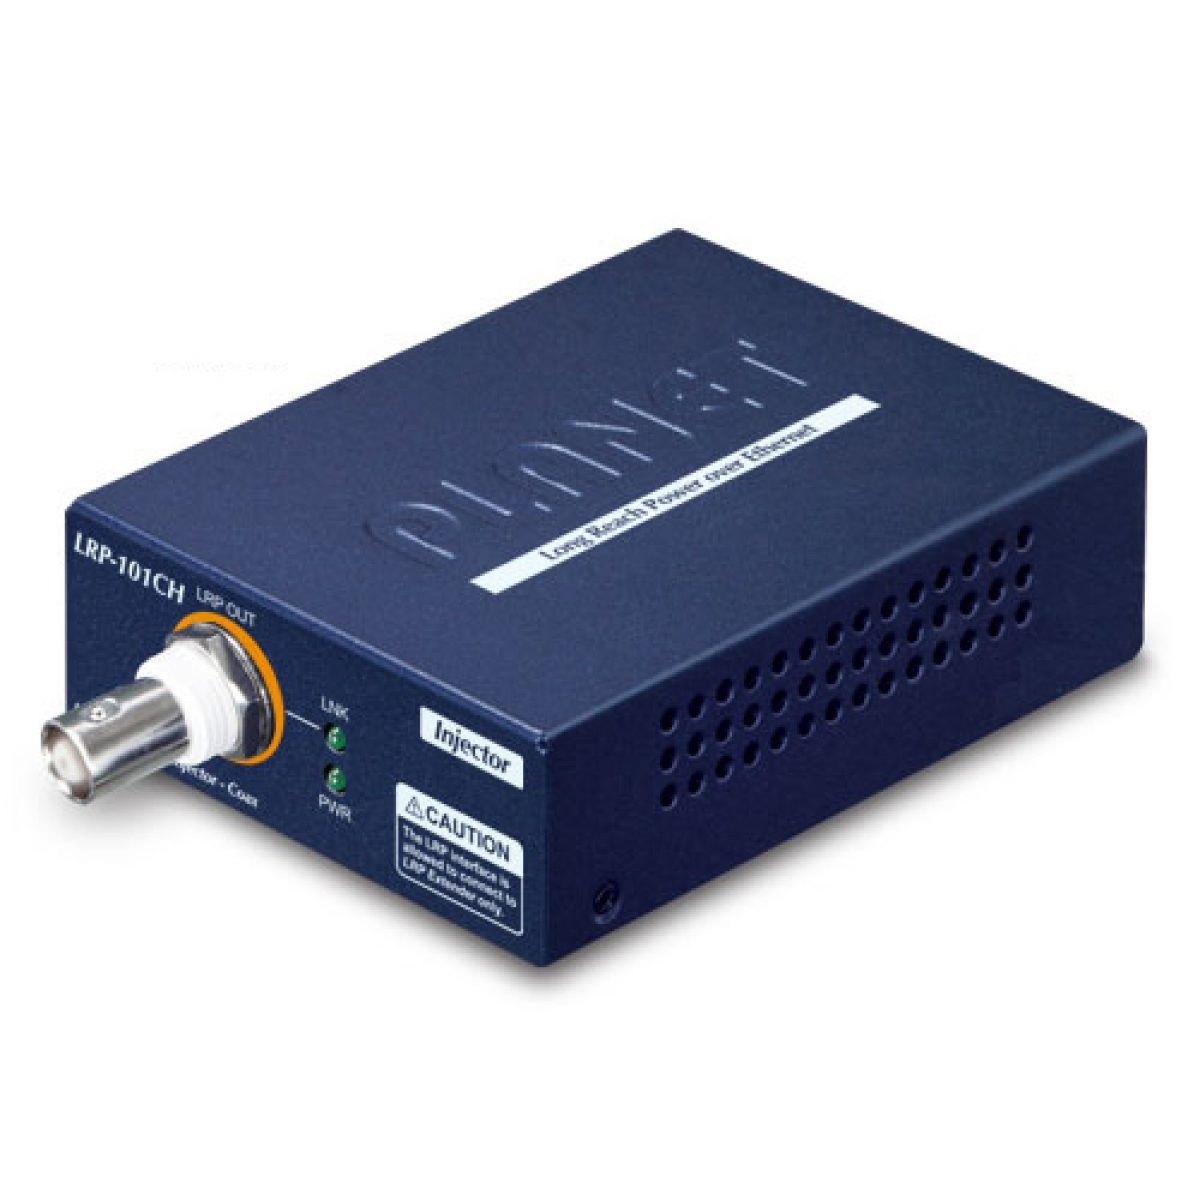 AXIS T8641 Ethernet Over Coax Base Unit PoE+ - media converter - 10Mb LAN,  100Mb LAN - 5028-411 - PoE Injectors 